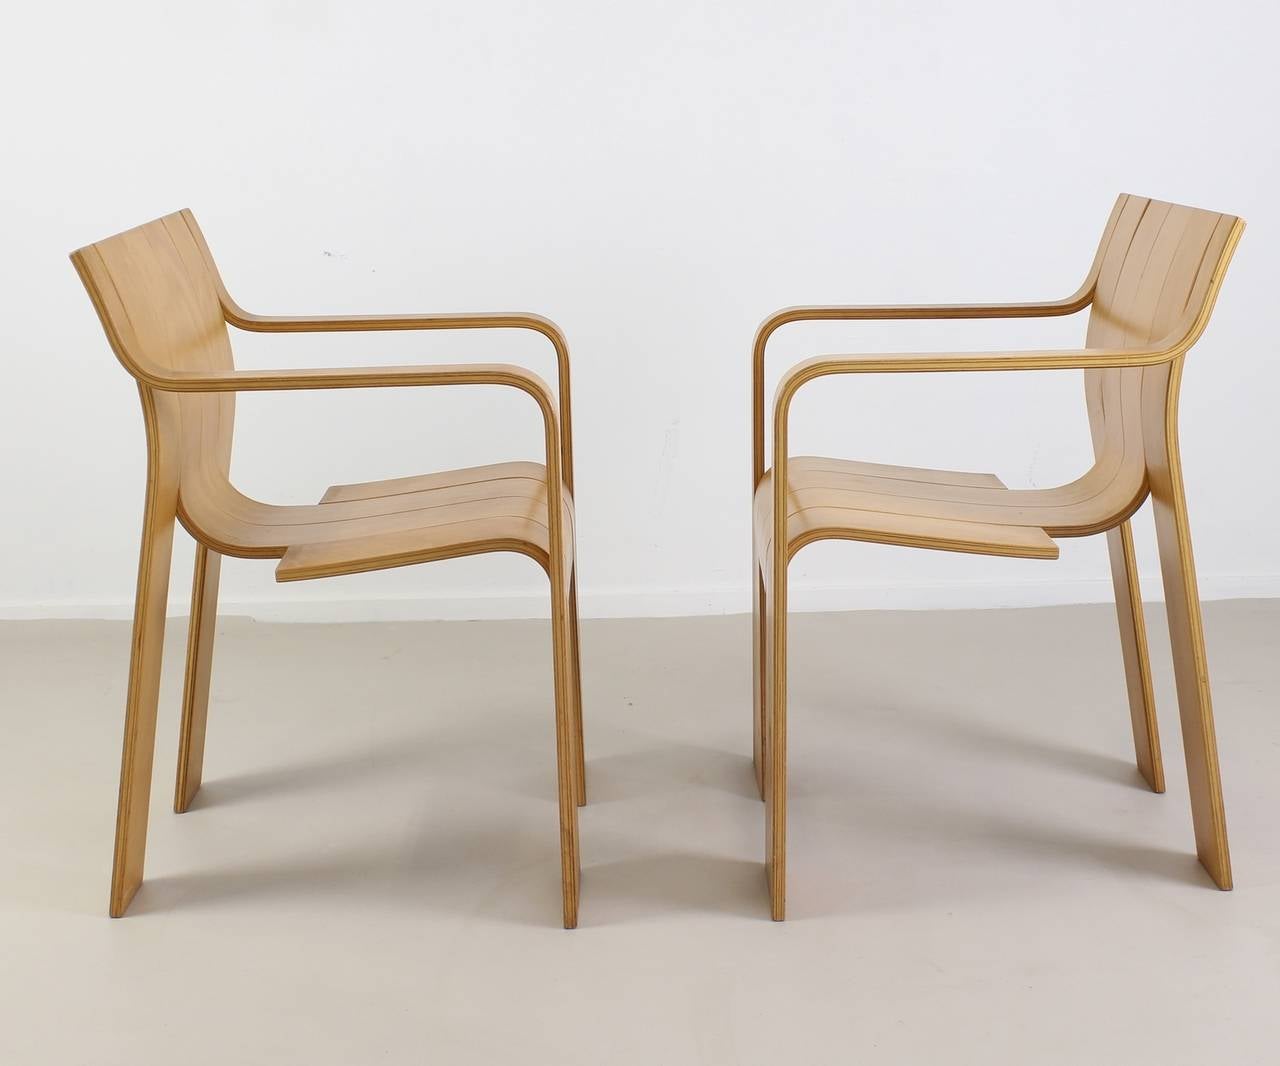 Late 20th Century Dutch Design Strip Chairs by Gijs Bakker for Castelijn Holland